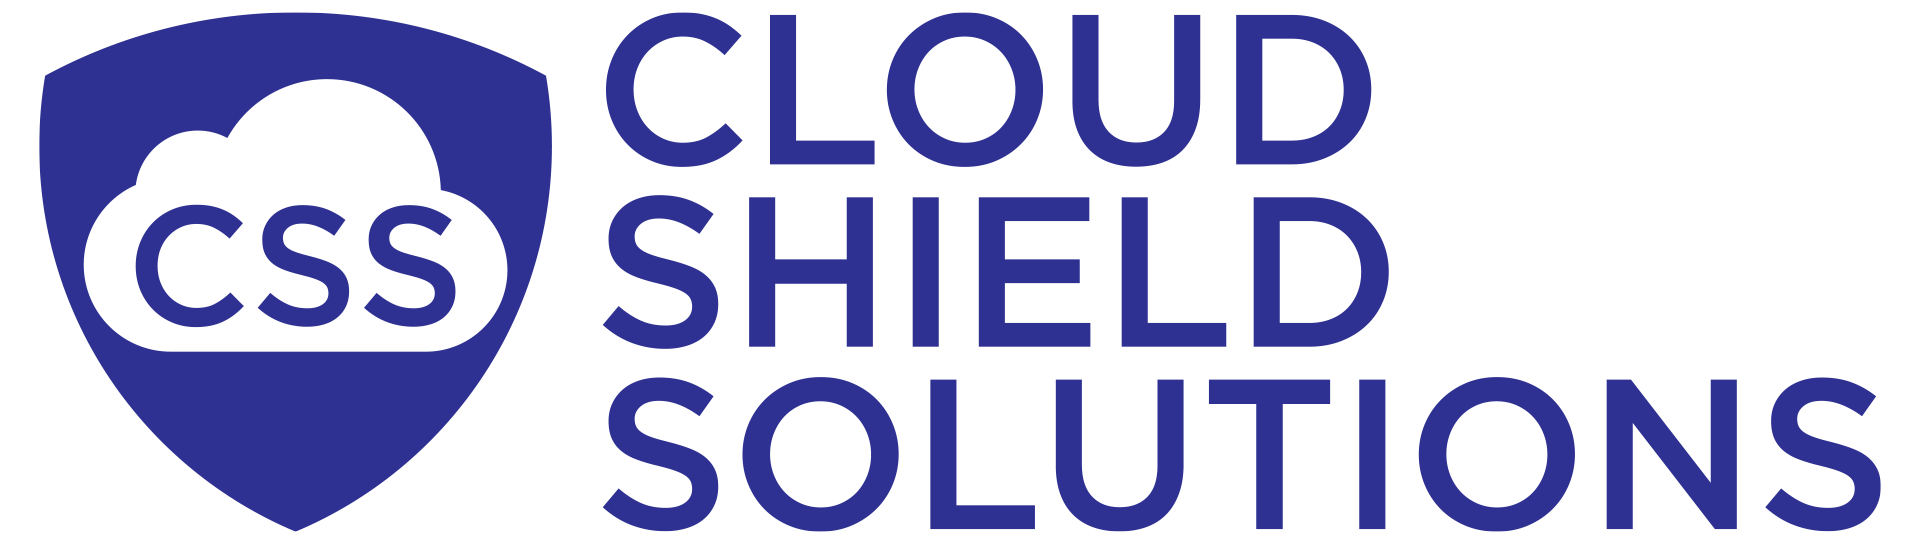 Cloud Shield Solutions llc